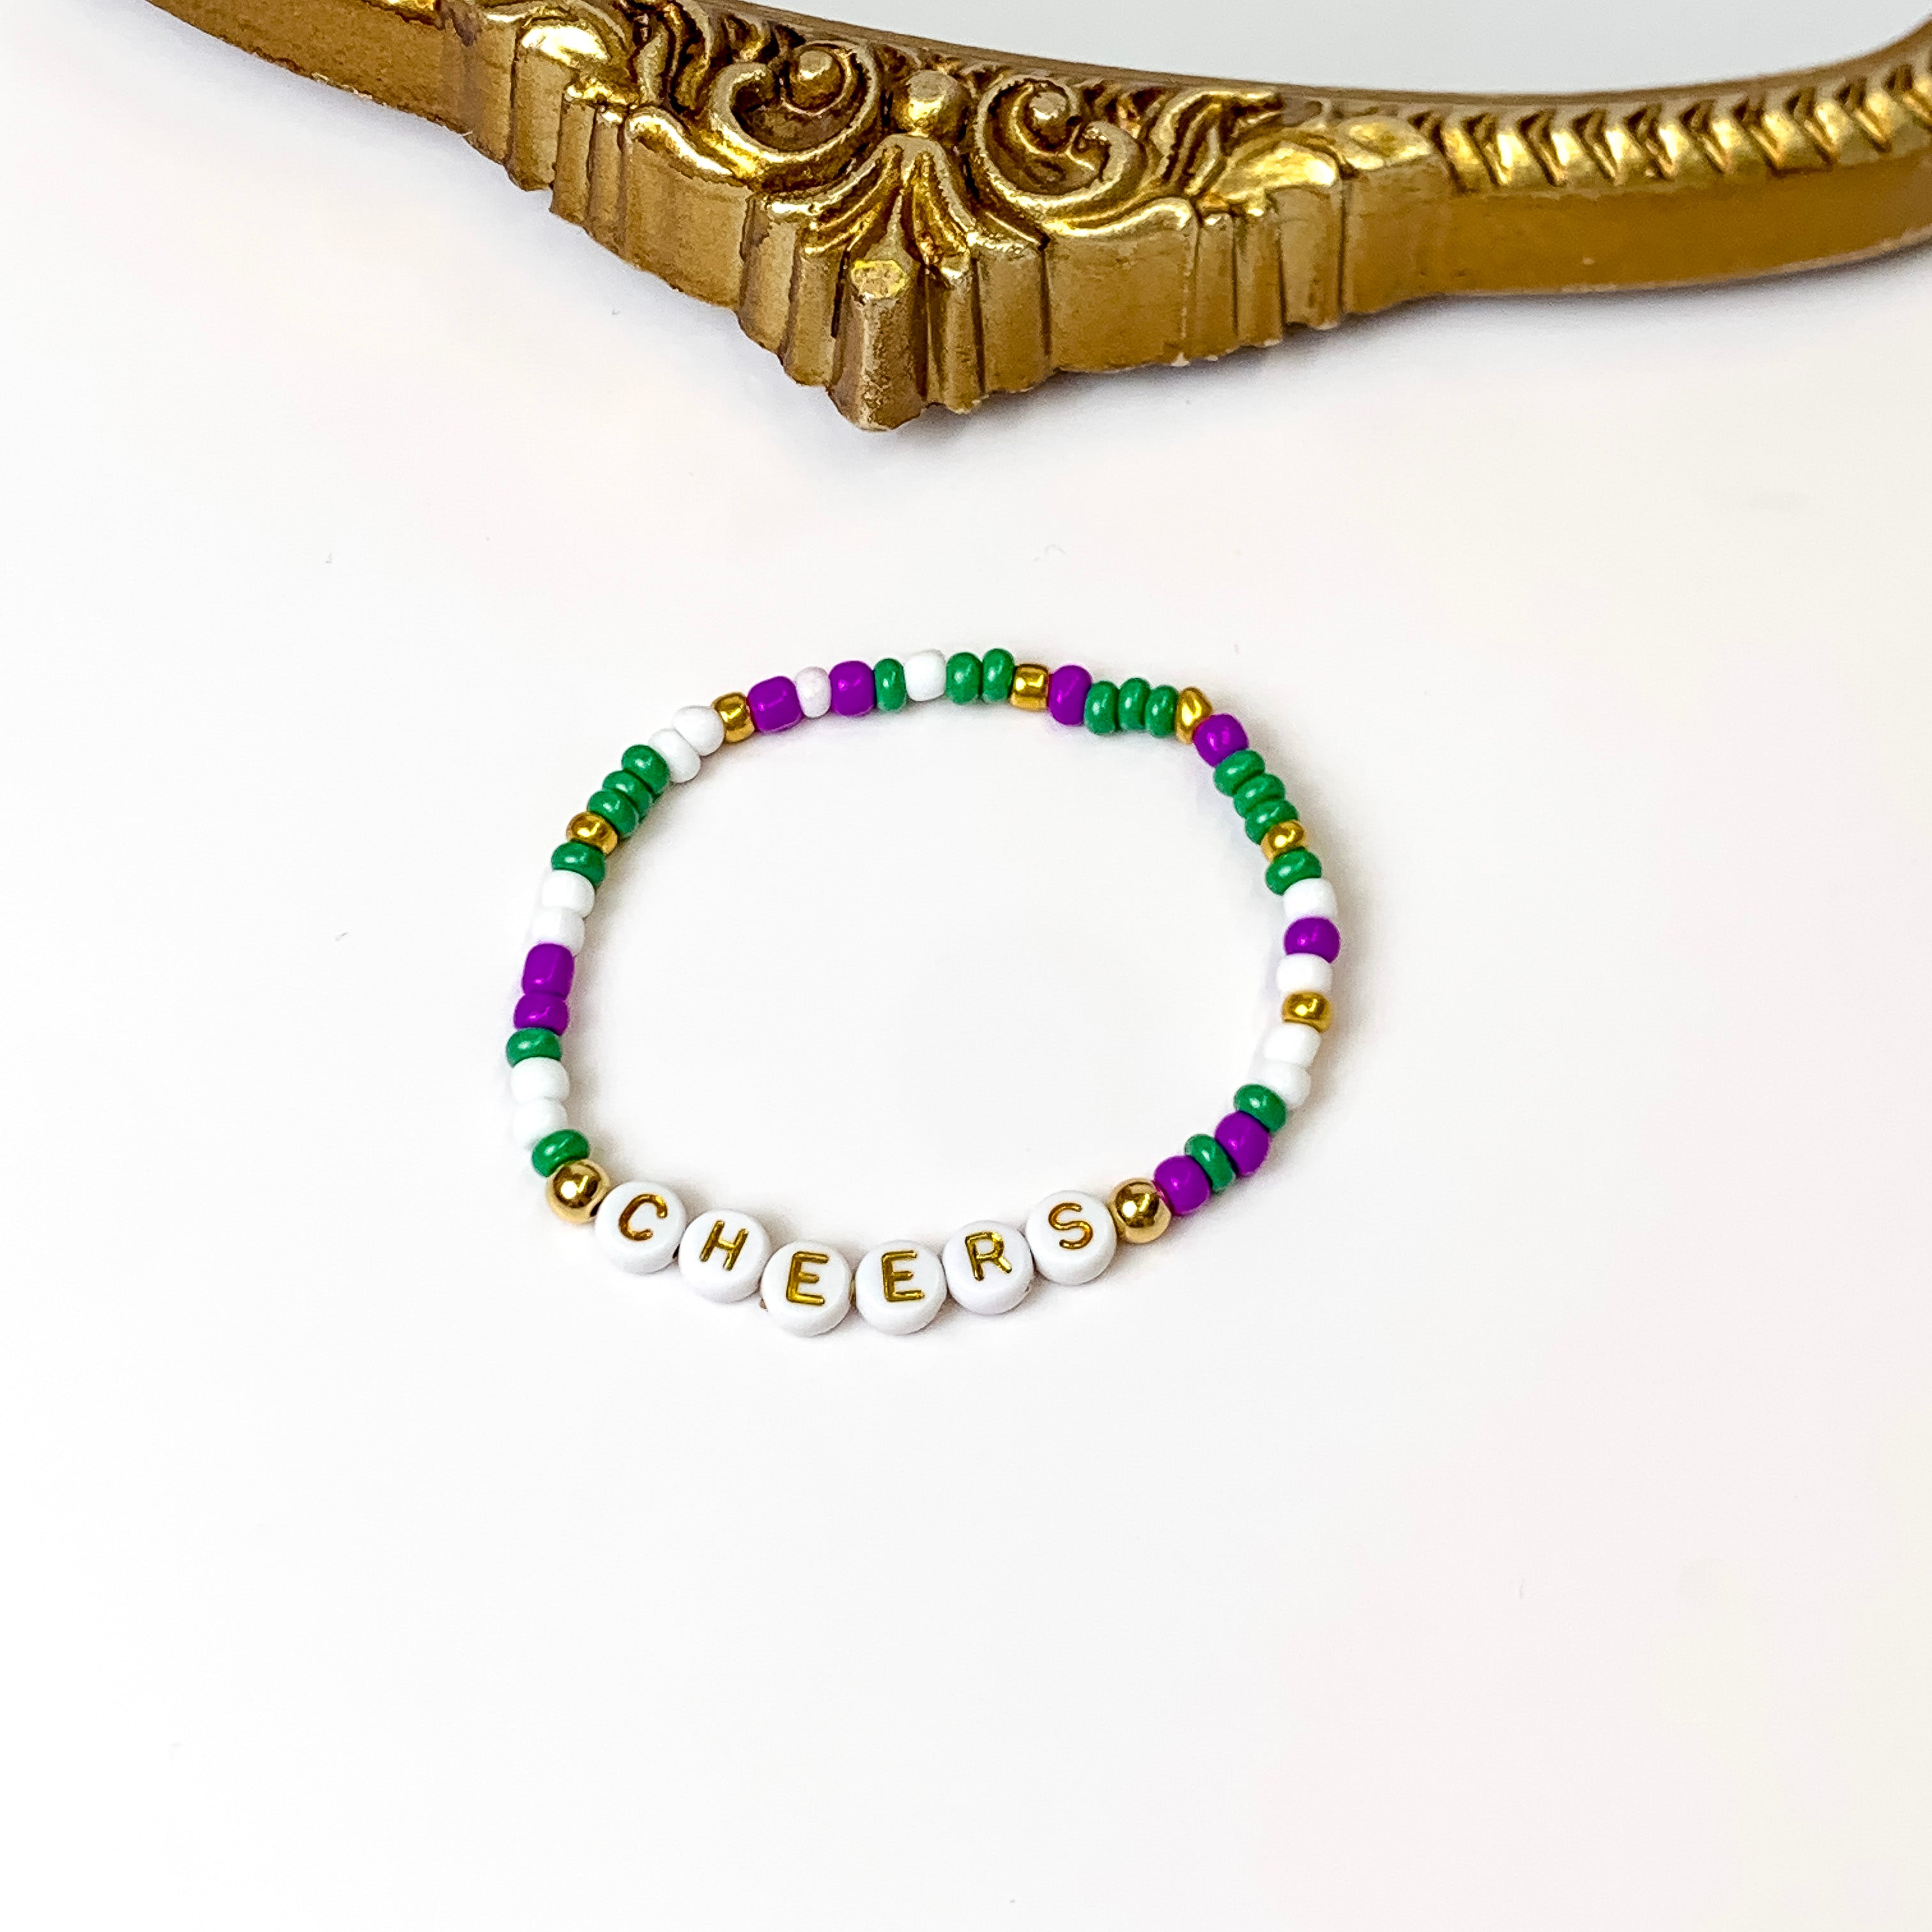 Buy 3 for $10 | St. Patrick's Day Friendship Stretch Bracelets - Giddy Up Glamour Boutique